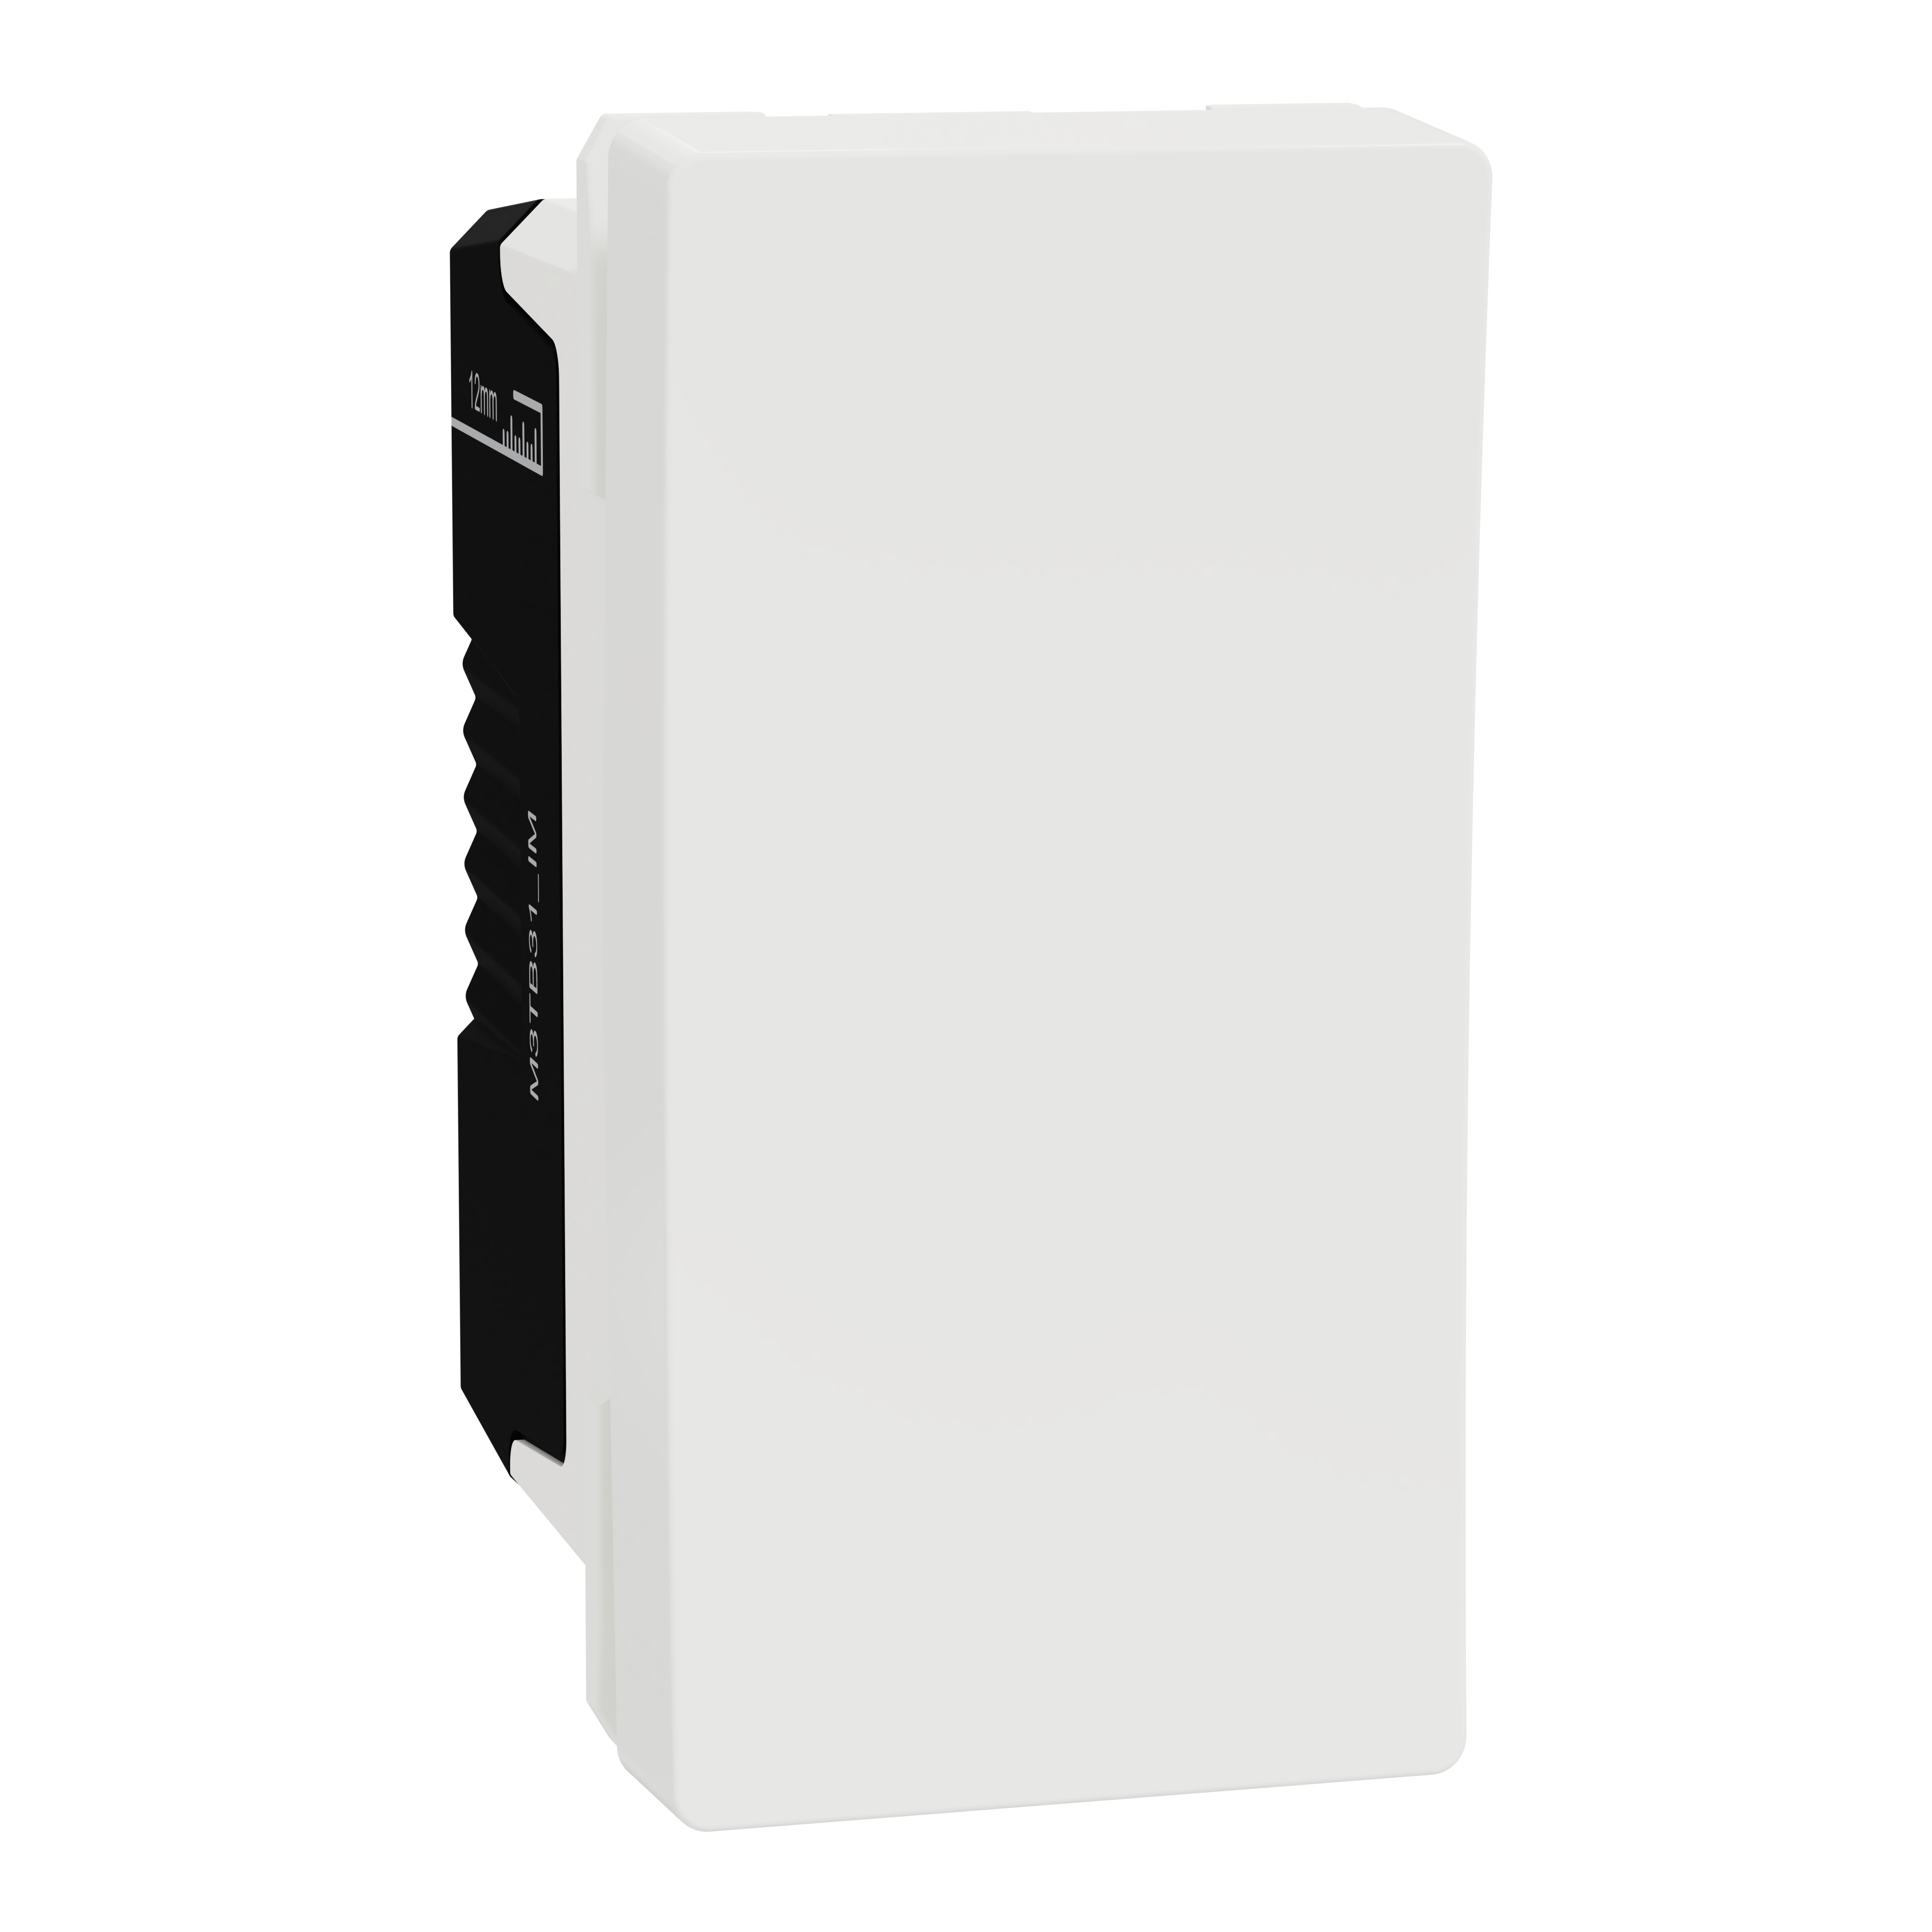 Intermediate Switch, Miluz E, 10-16A, 250V, 1 module, White